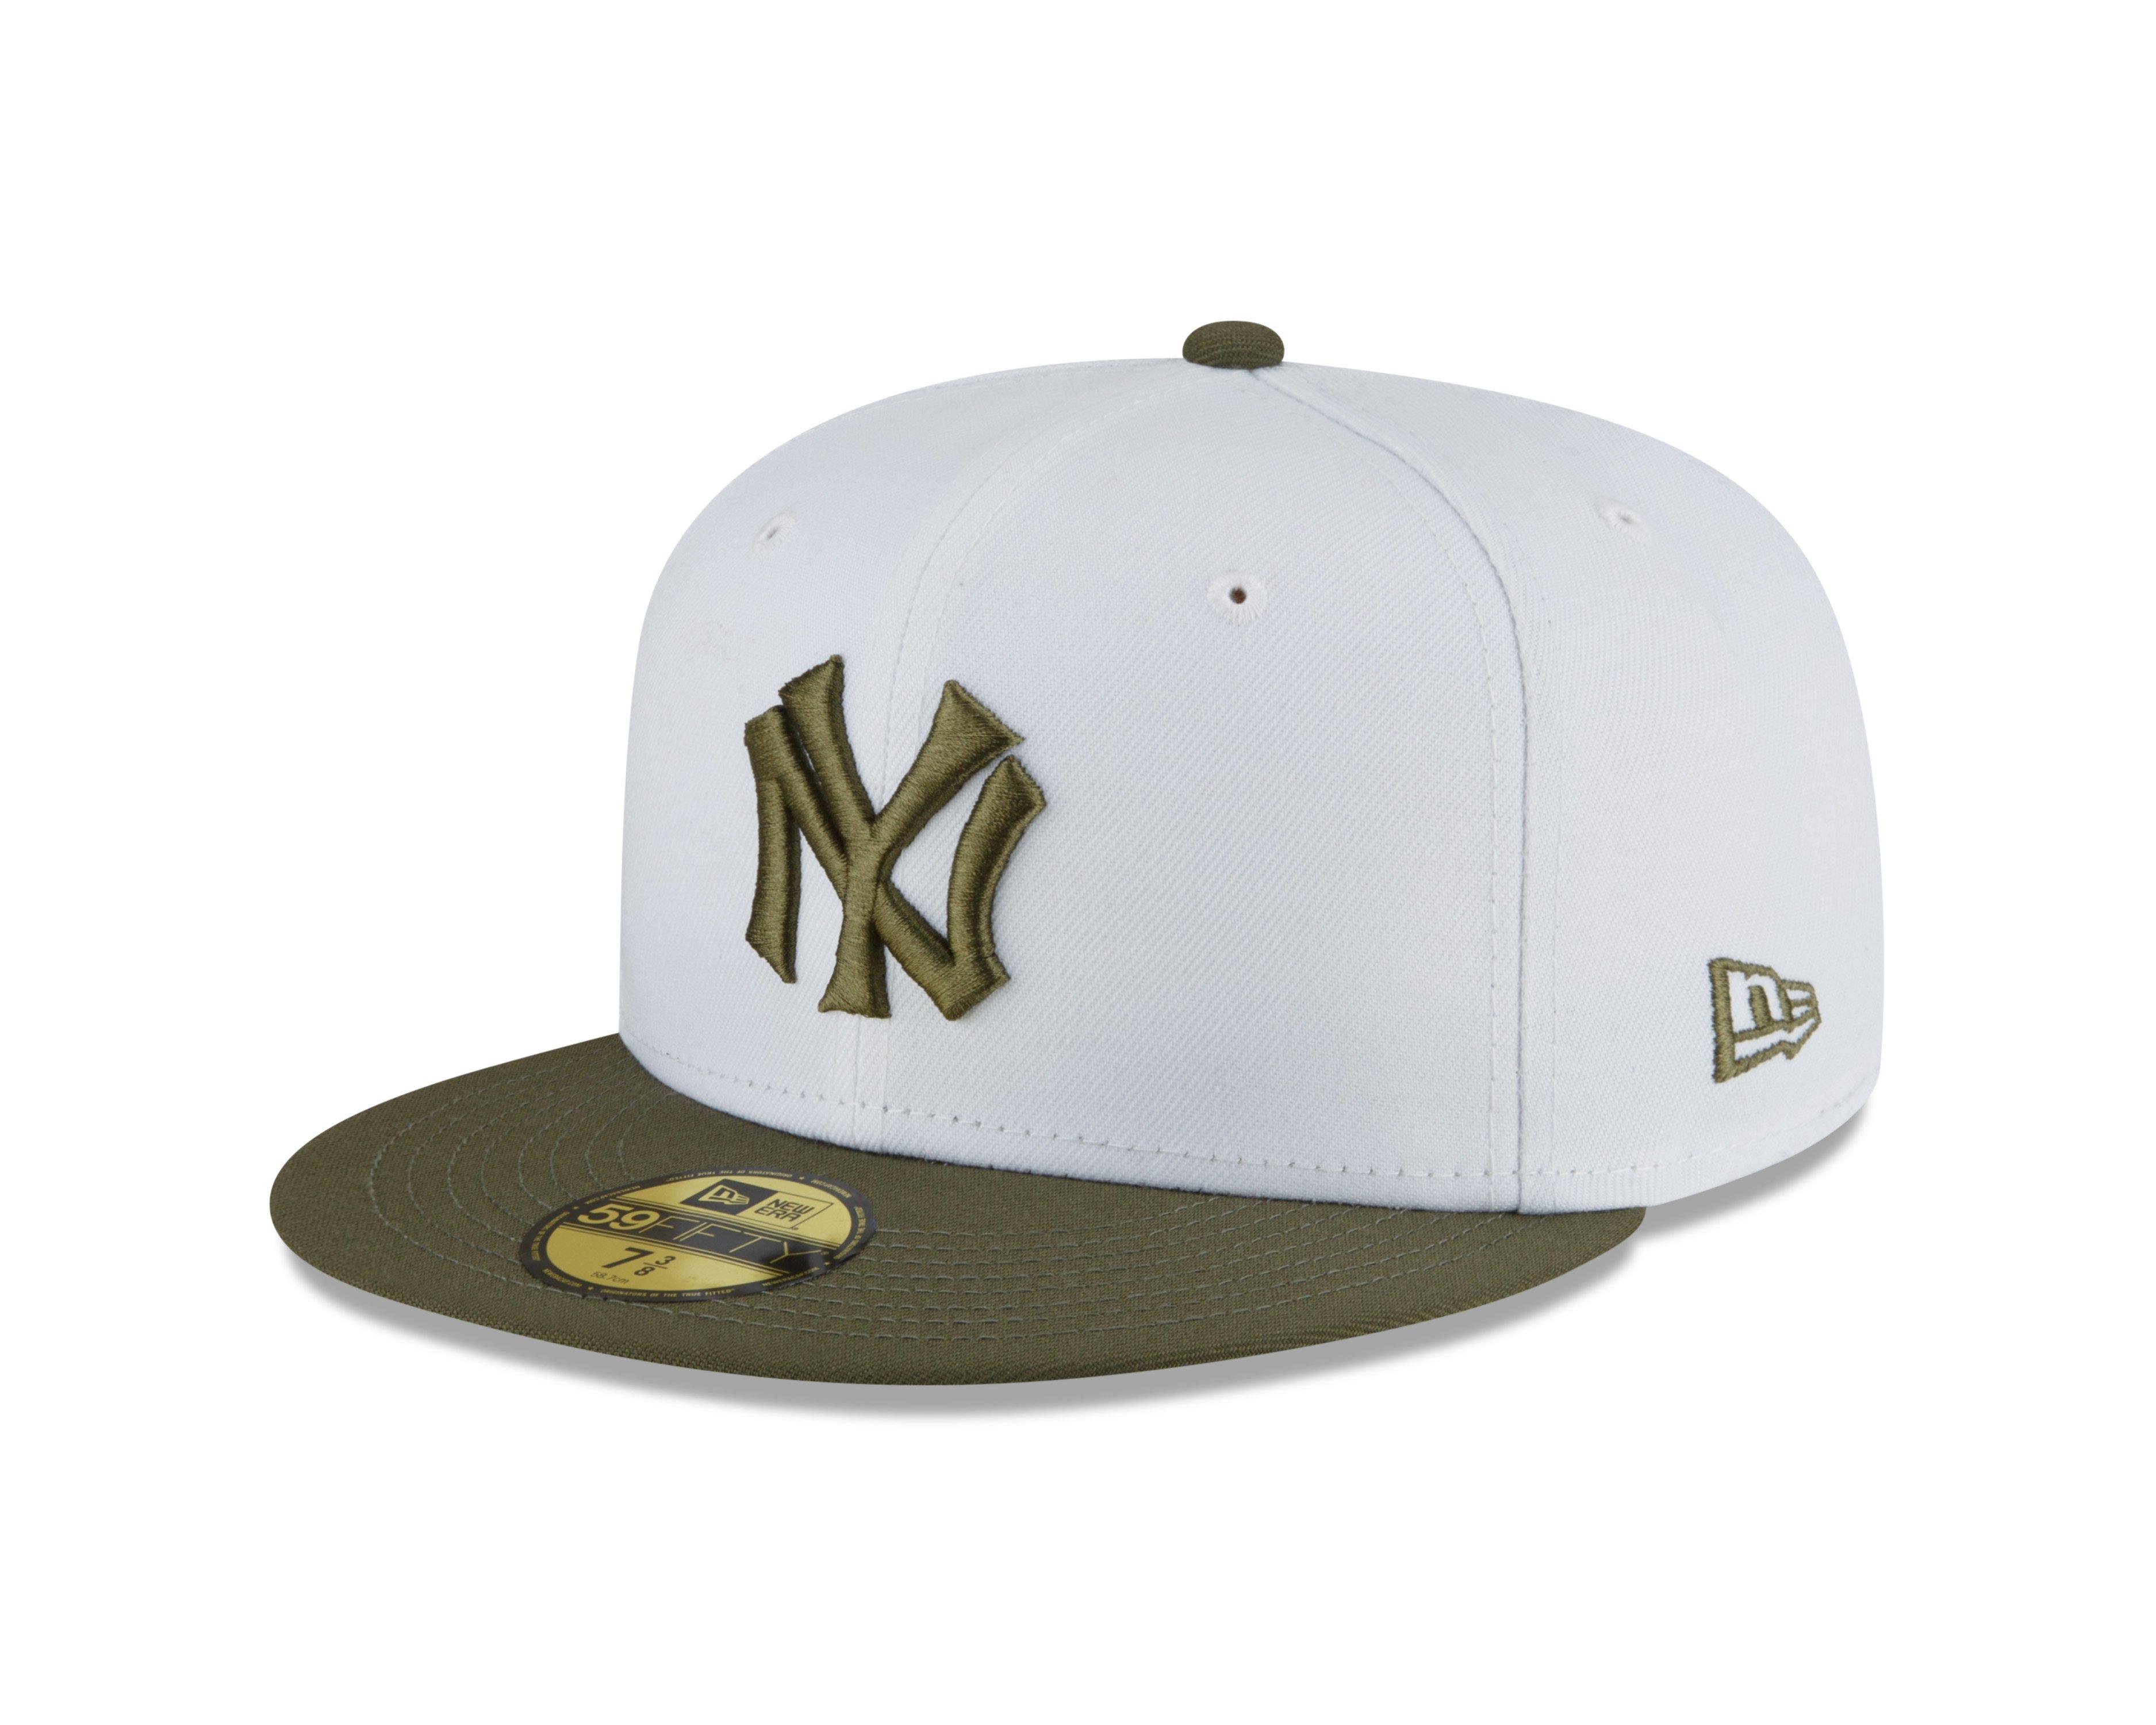 Men's New York Yankees Nike On-Field Road Hot Jacket